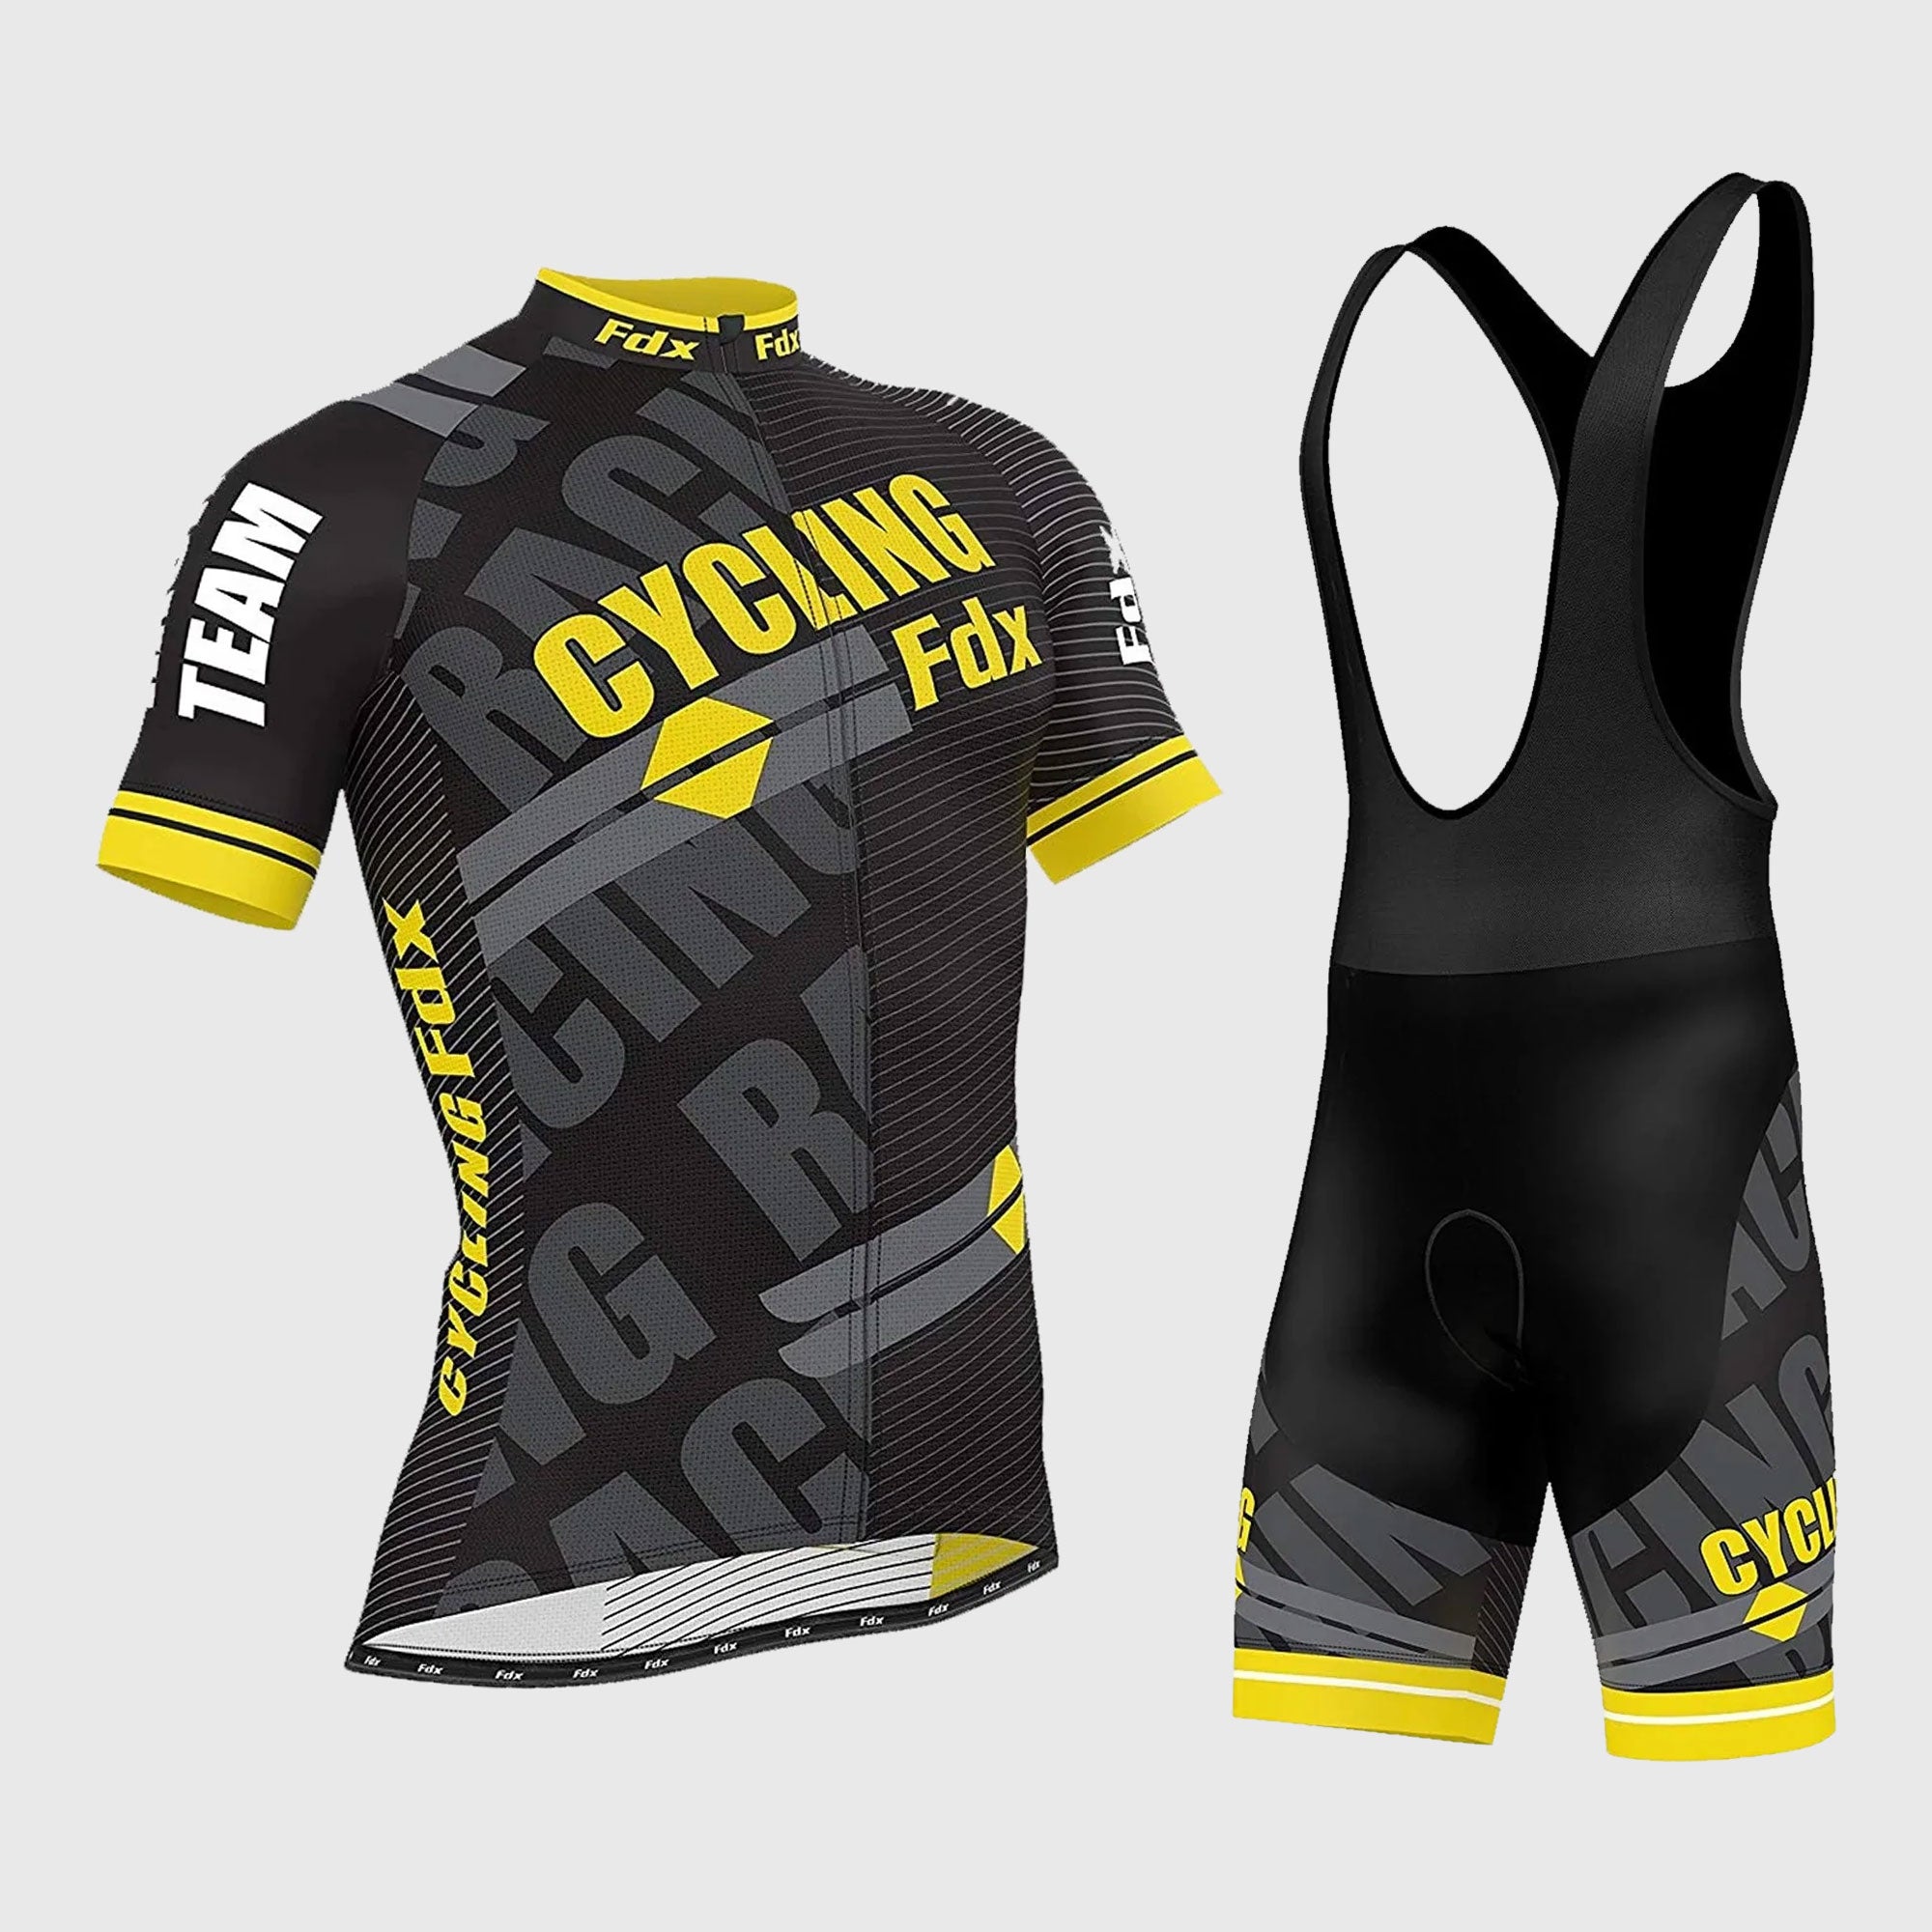 Fdx Mens Yellow Short Sleeve Cycling Jersey & Gel Padded Bib Shorts Best Summer Road Bike Wear Light Weight, Hi-viz Reflectors & Pockets - Core